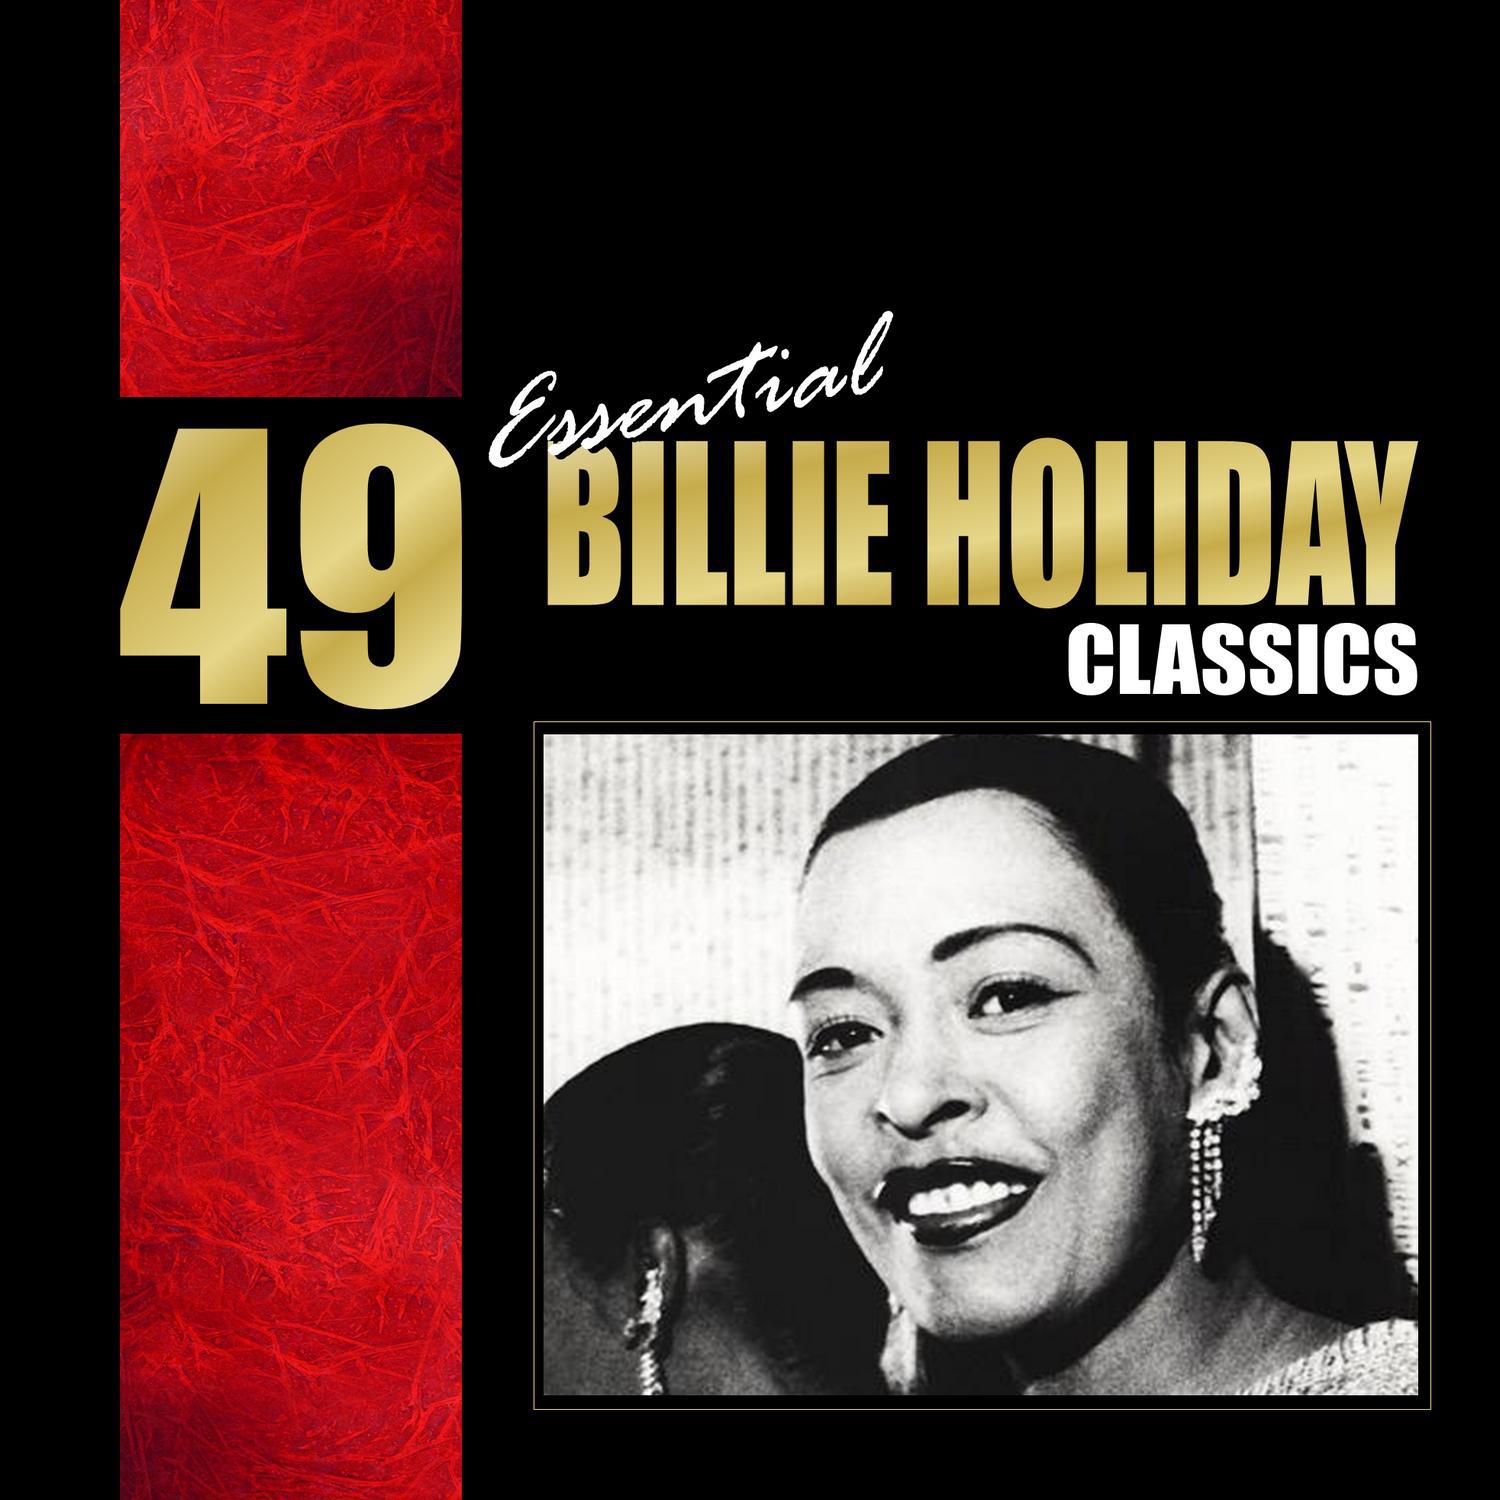 49 Essential Billie Holiday Classics